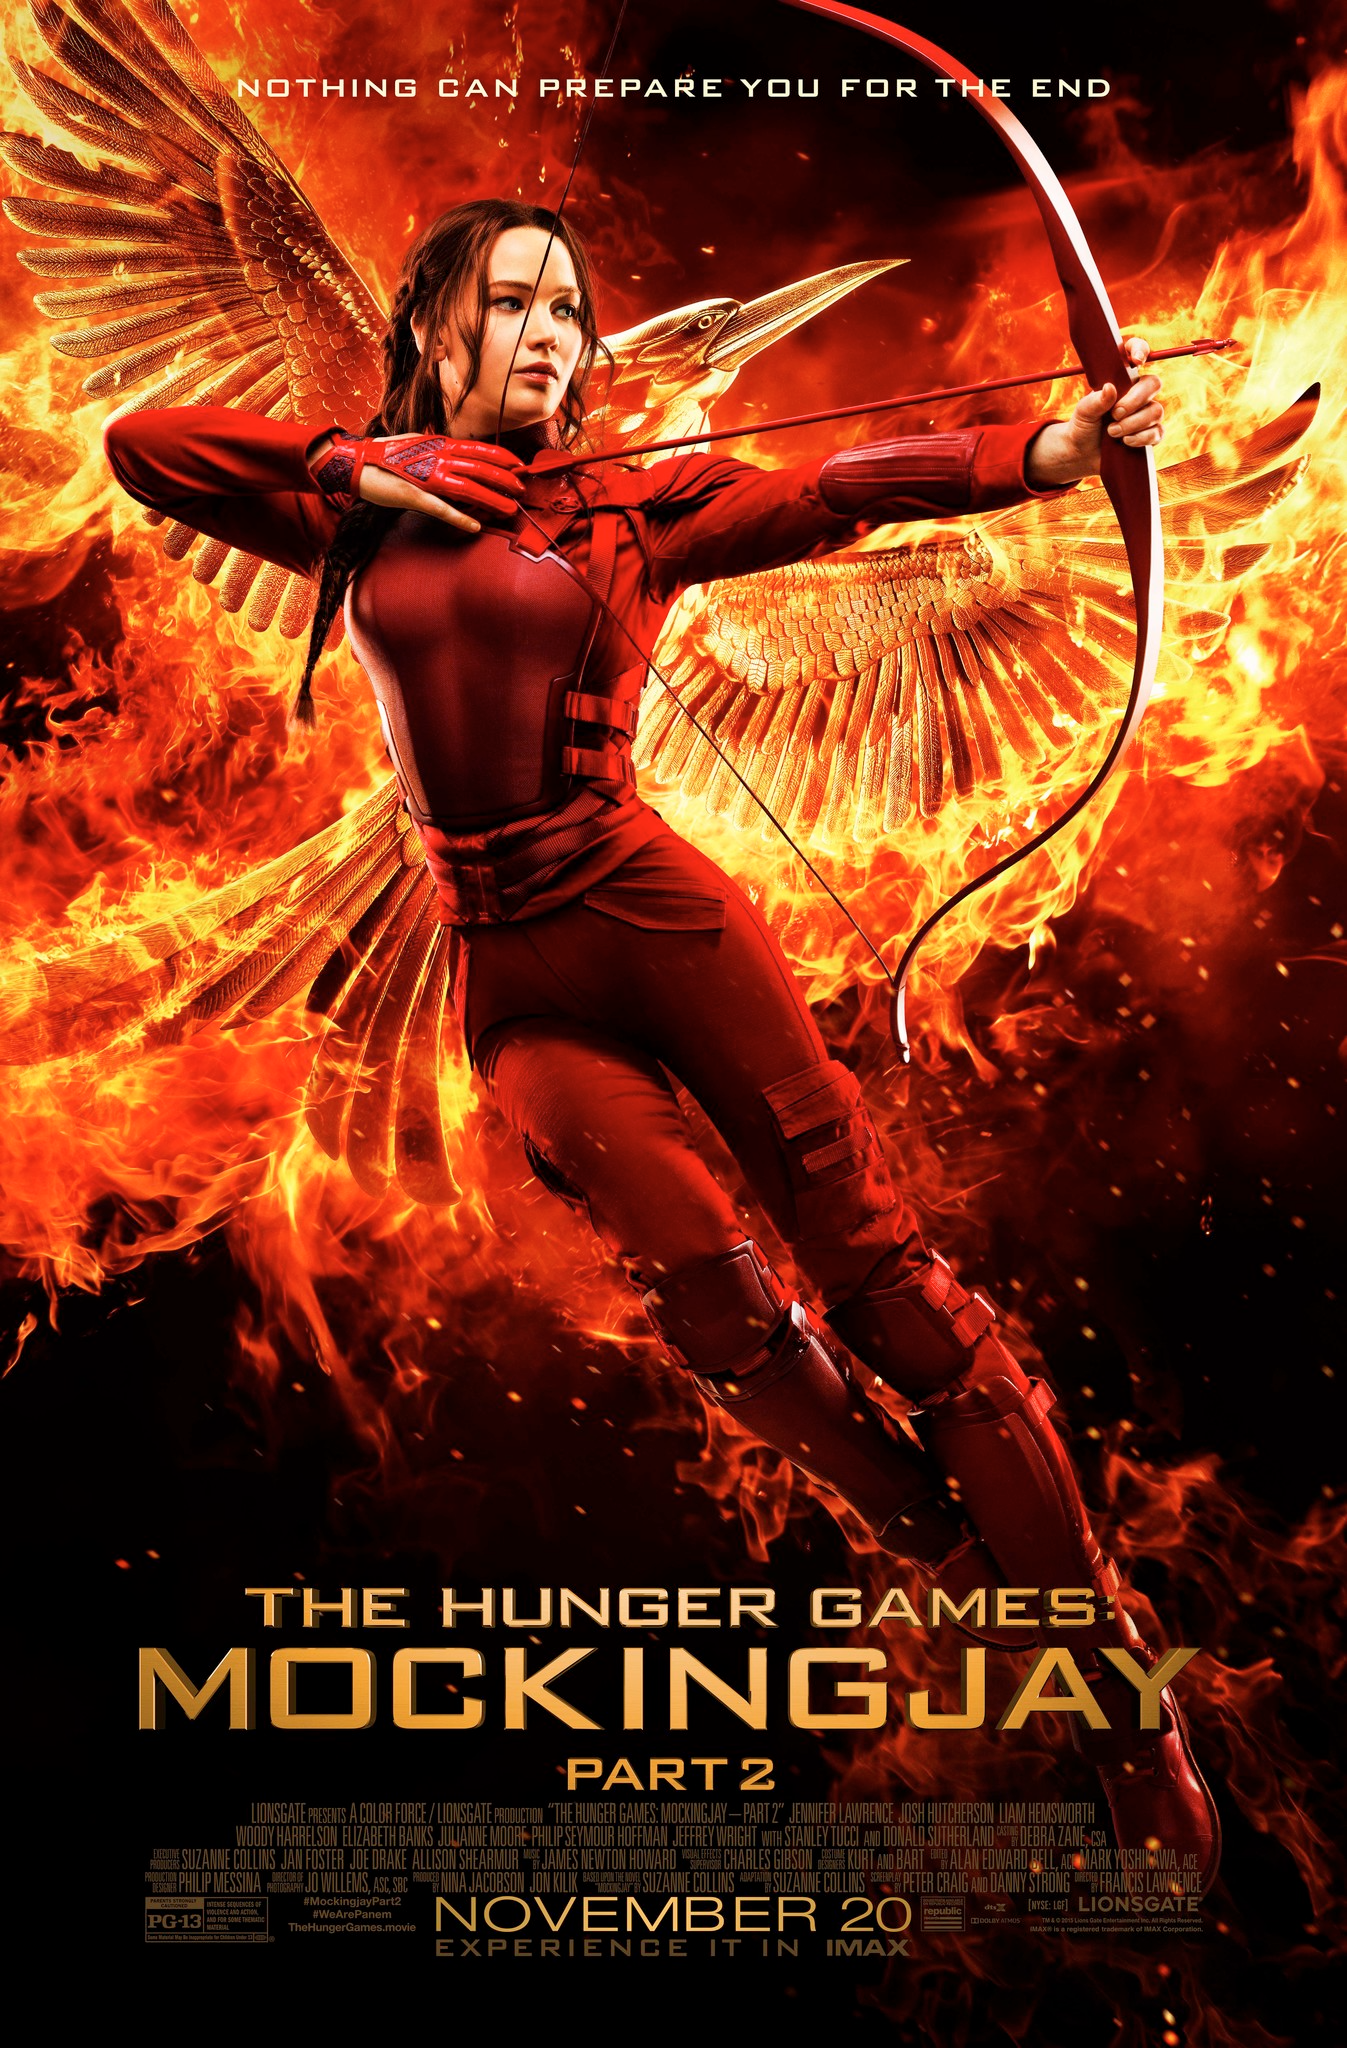 The Hunger Games: Mockingjay - Part 2 UK Premiere - YouTube